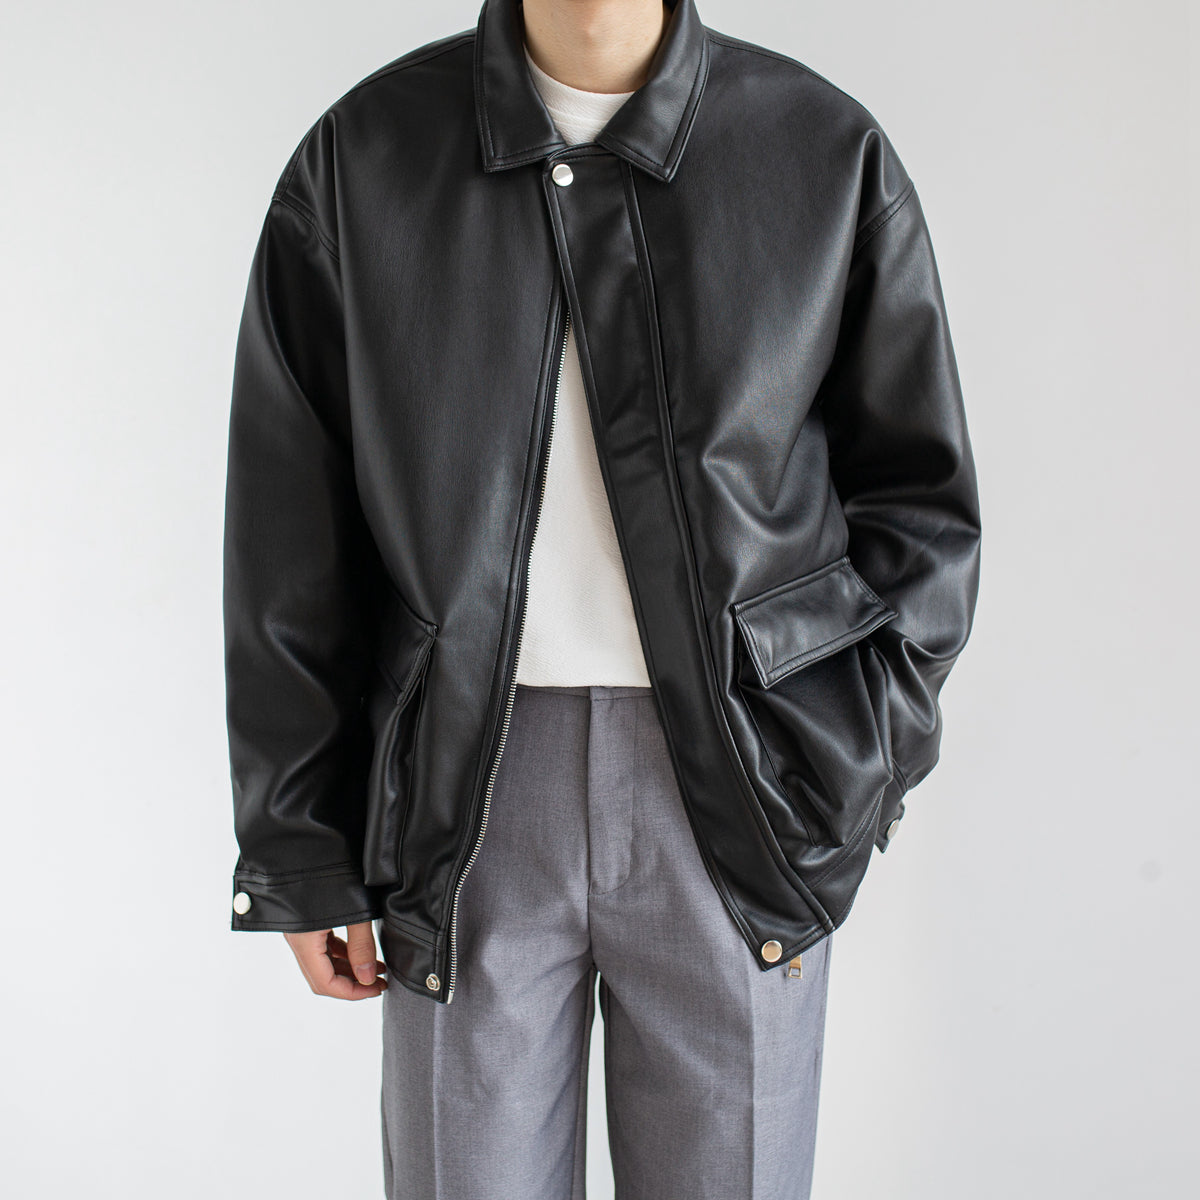 Men's Chic Leather Trendy Jacket  